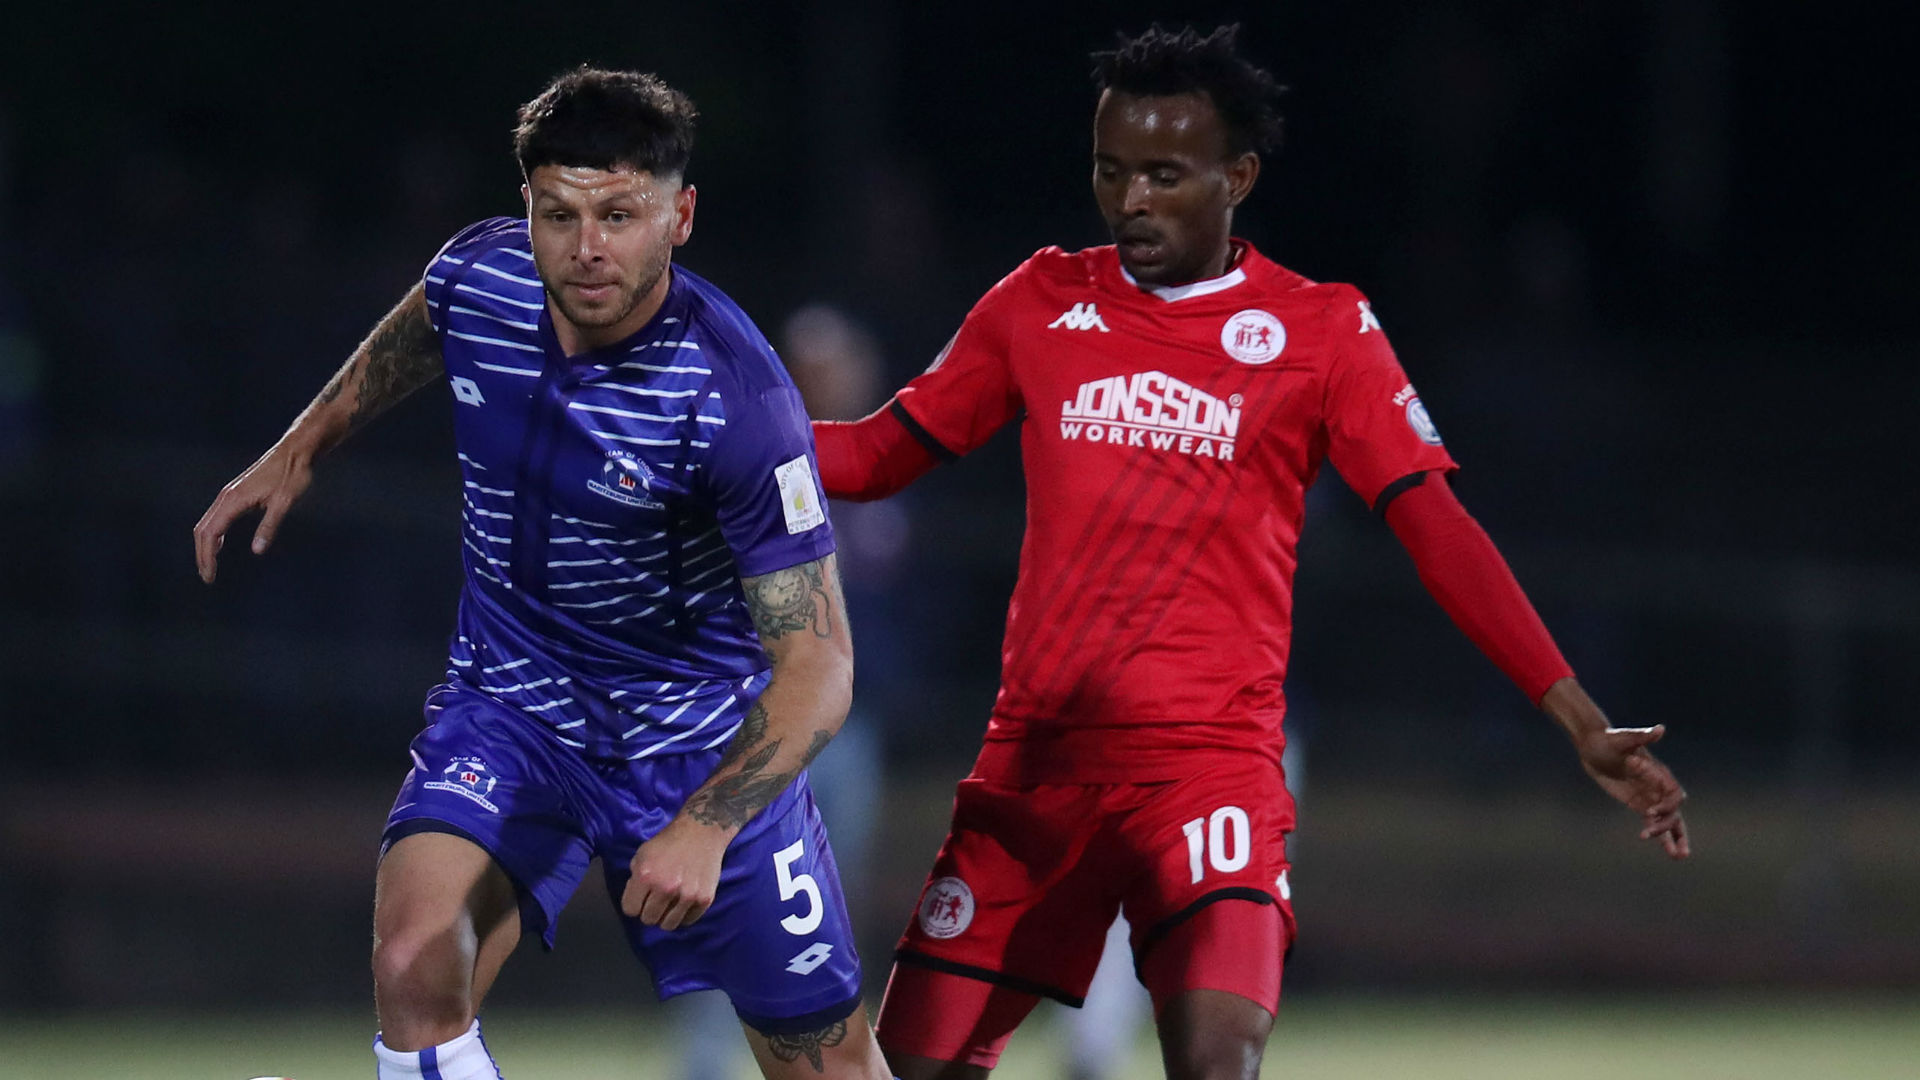 Maritzburg United need to get back on track against Polokwane City - Daniel Morgan